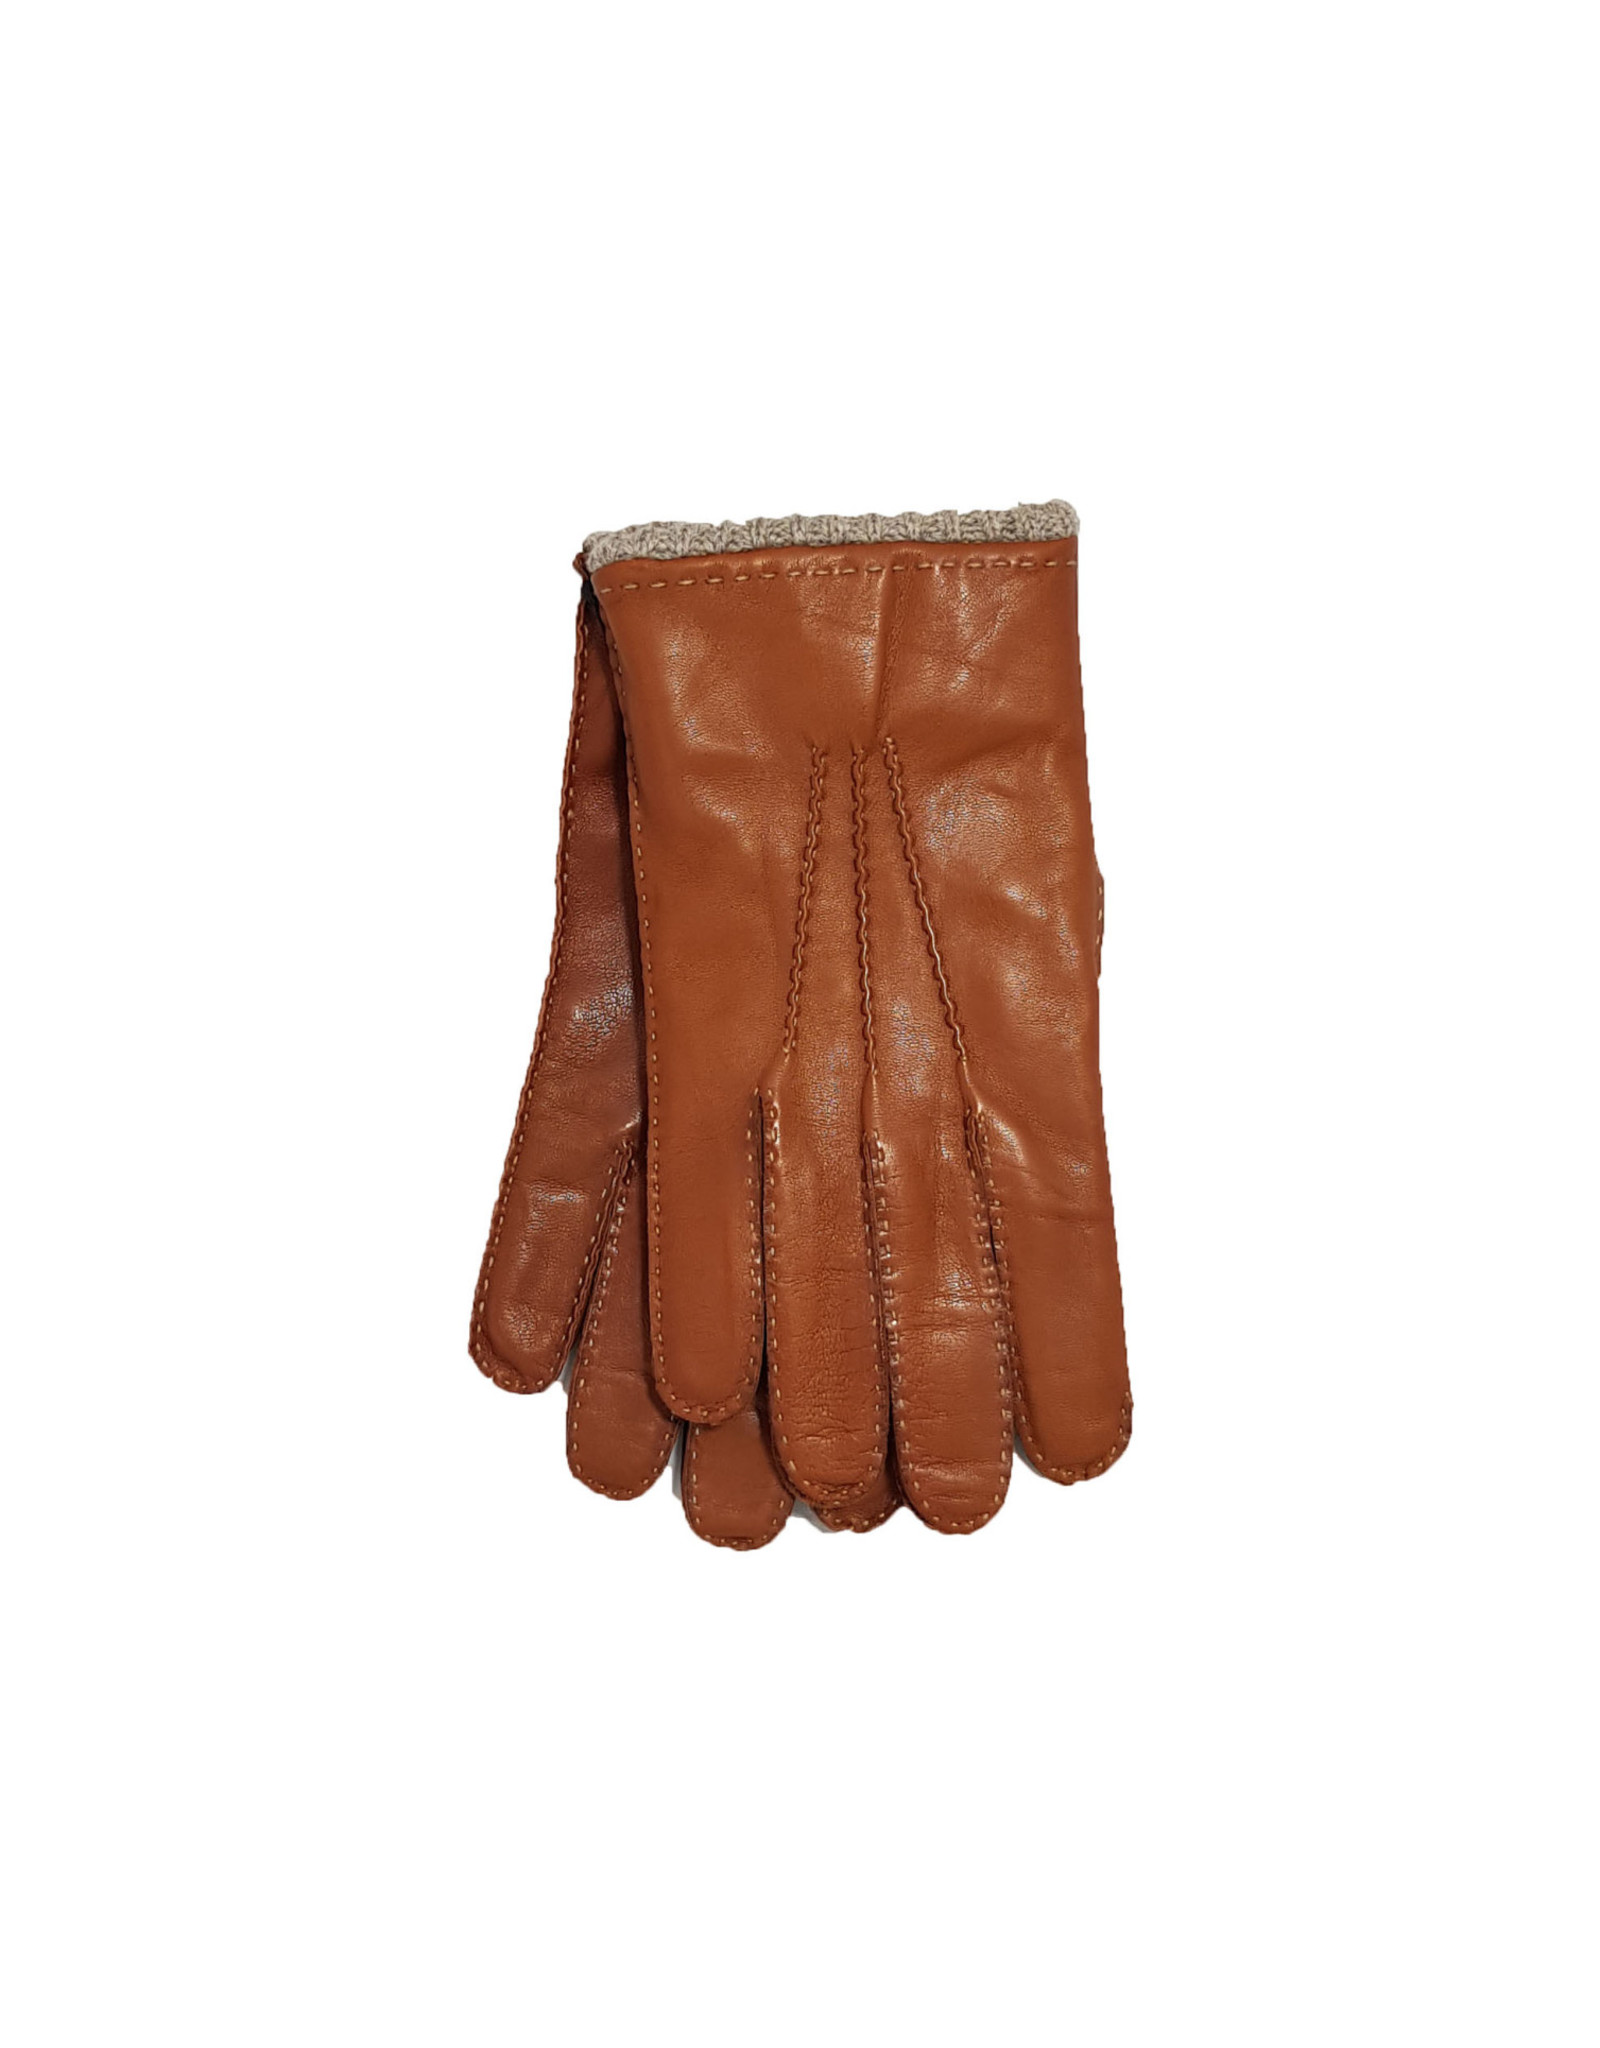 Mazzoleni Mazzoleni gloves leather camel